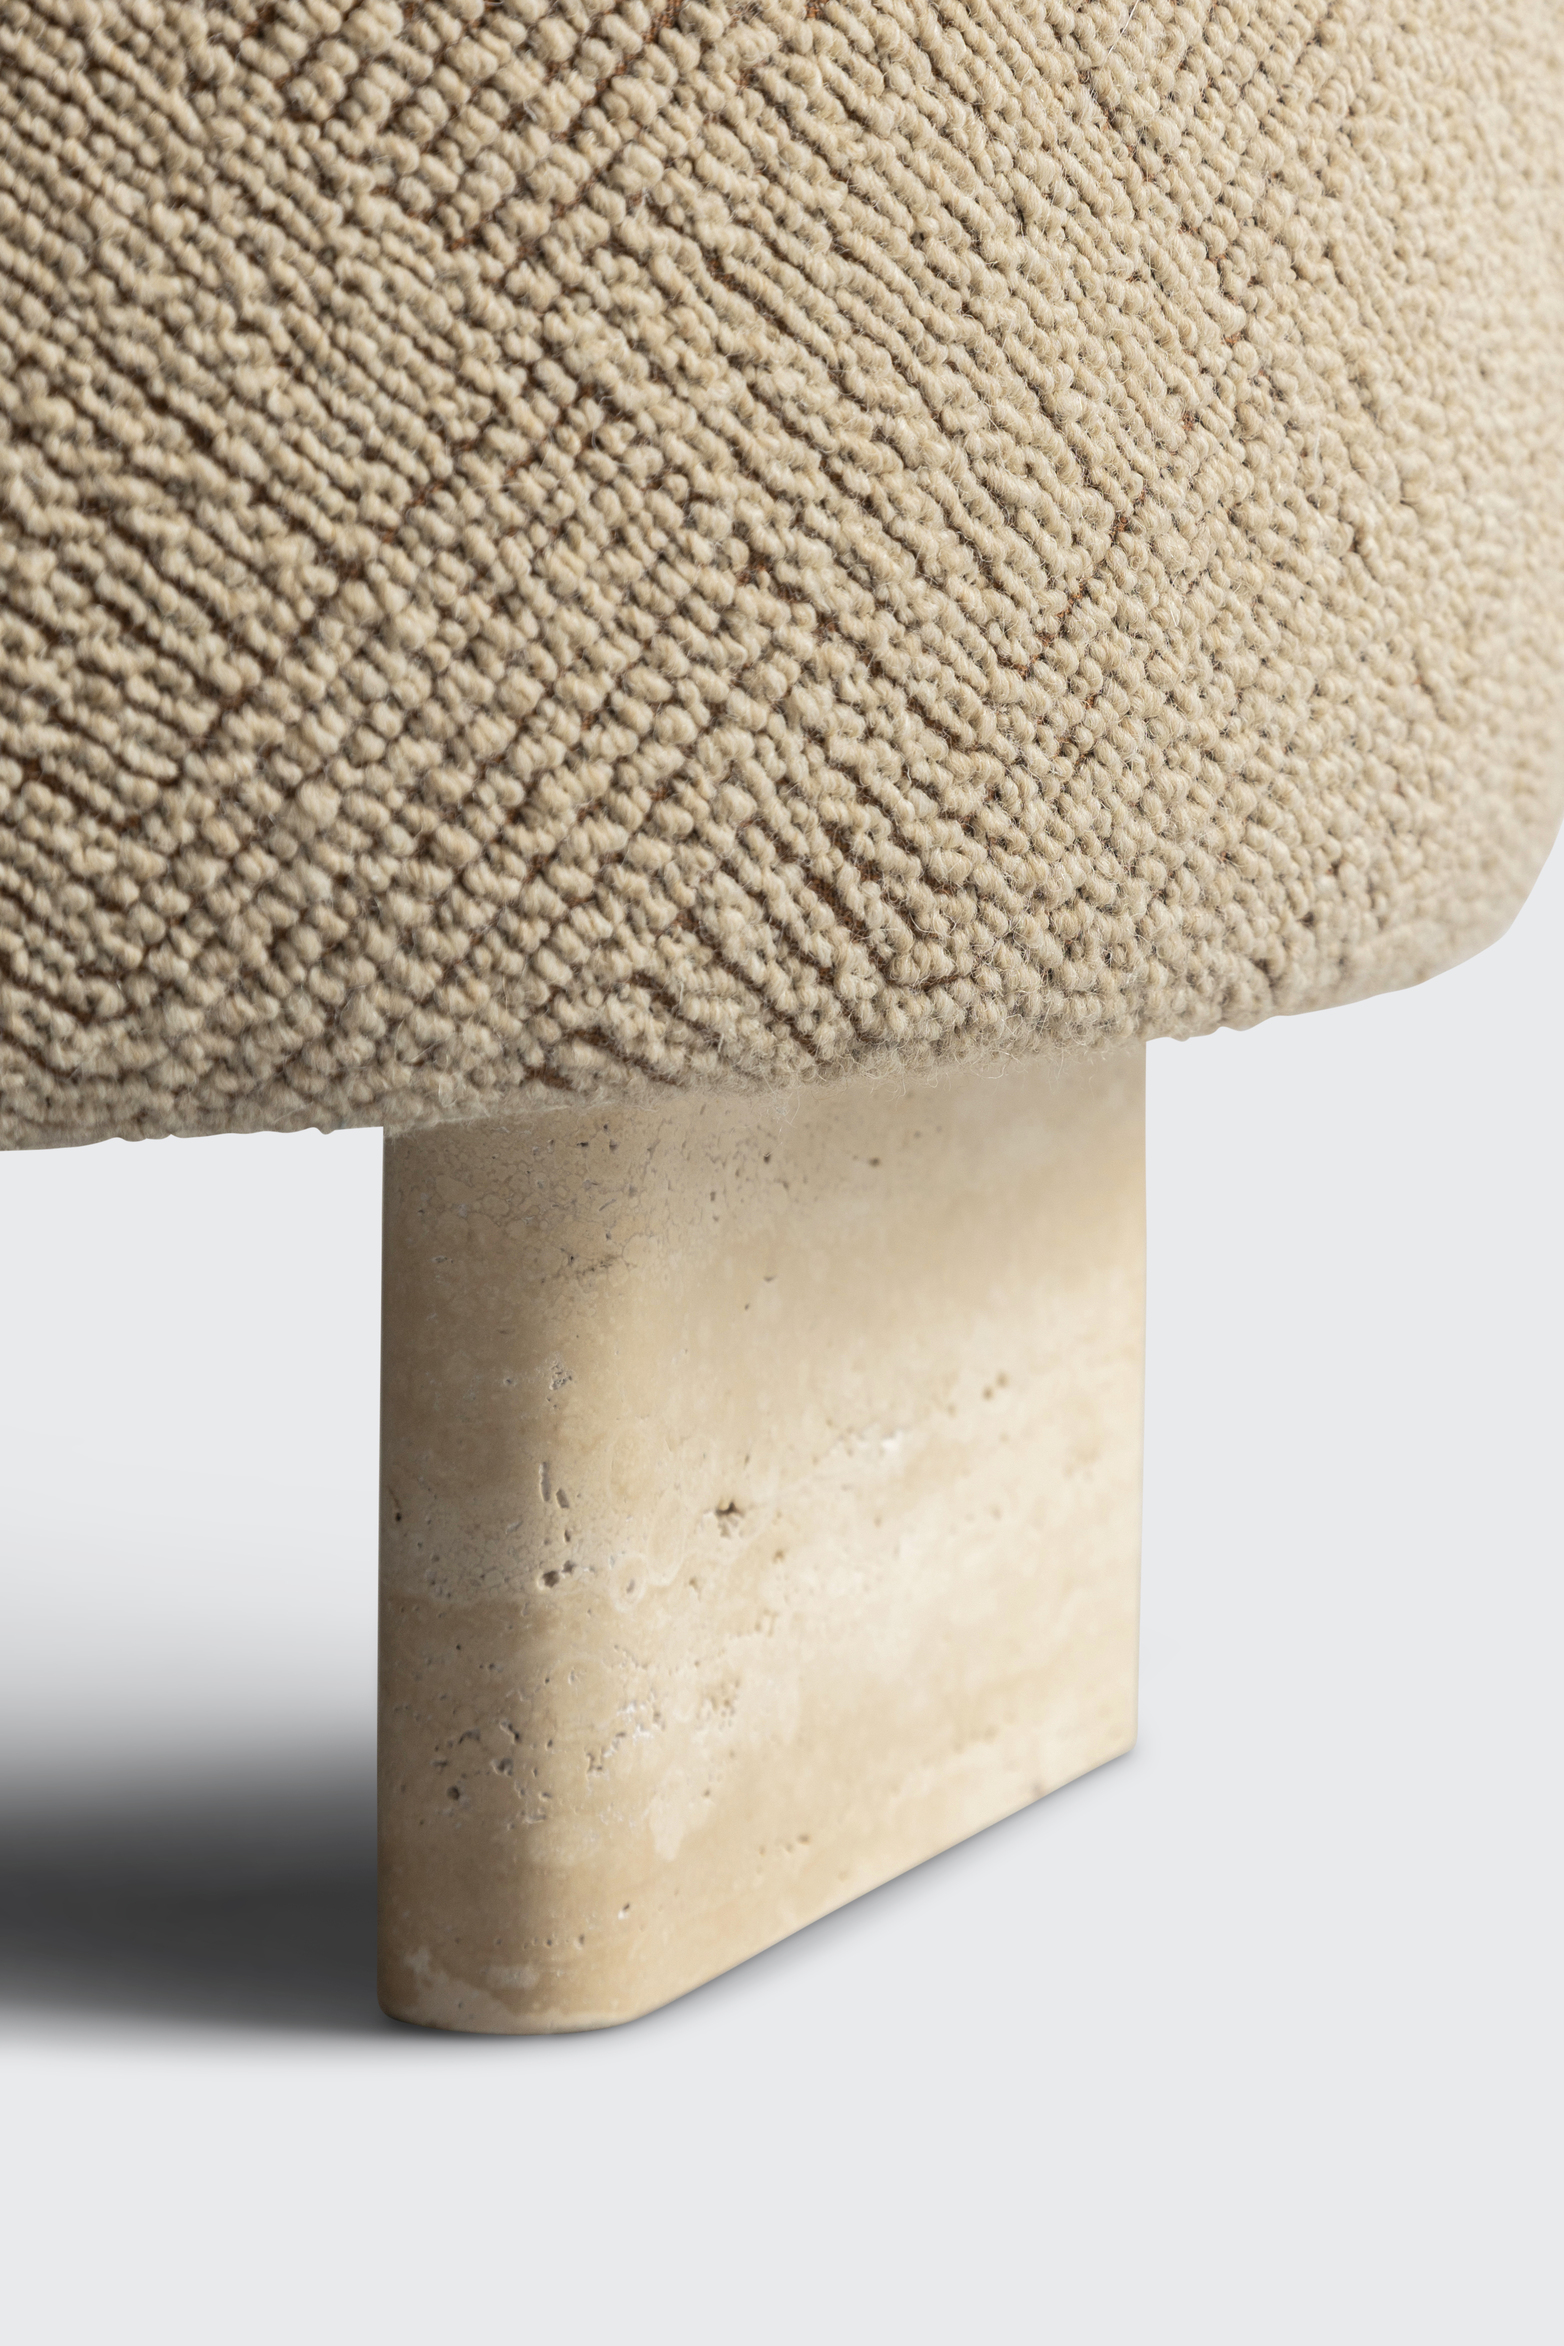 SAV travertine stone stool interior design architecture product seating luxury premium piece art beauty fashion naturalness virgin wool boucle yarns organically hand-crafted upholstery fabric luxurious natural stone feet